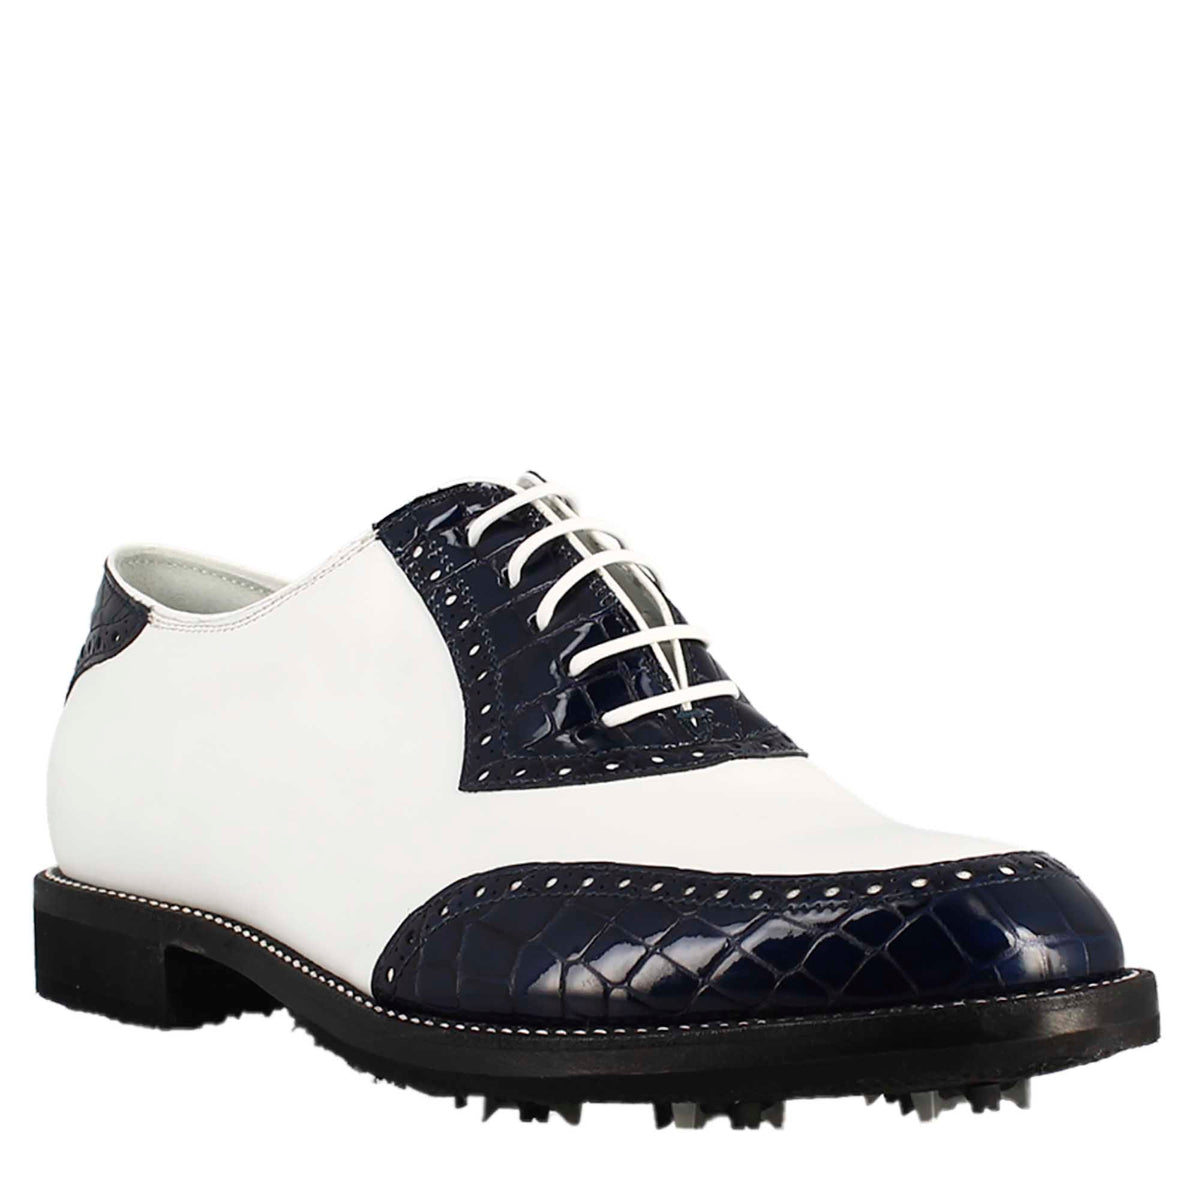 Scarpe golf da donna artigianali in pelle bianco e cocco blu